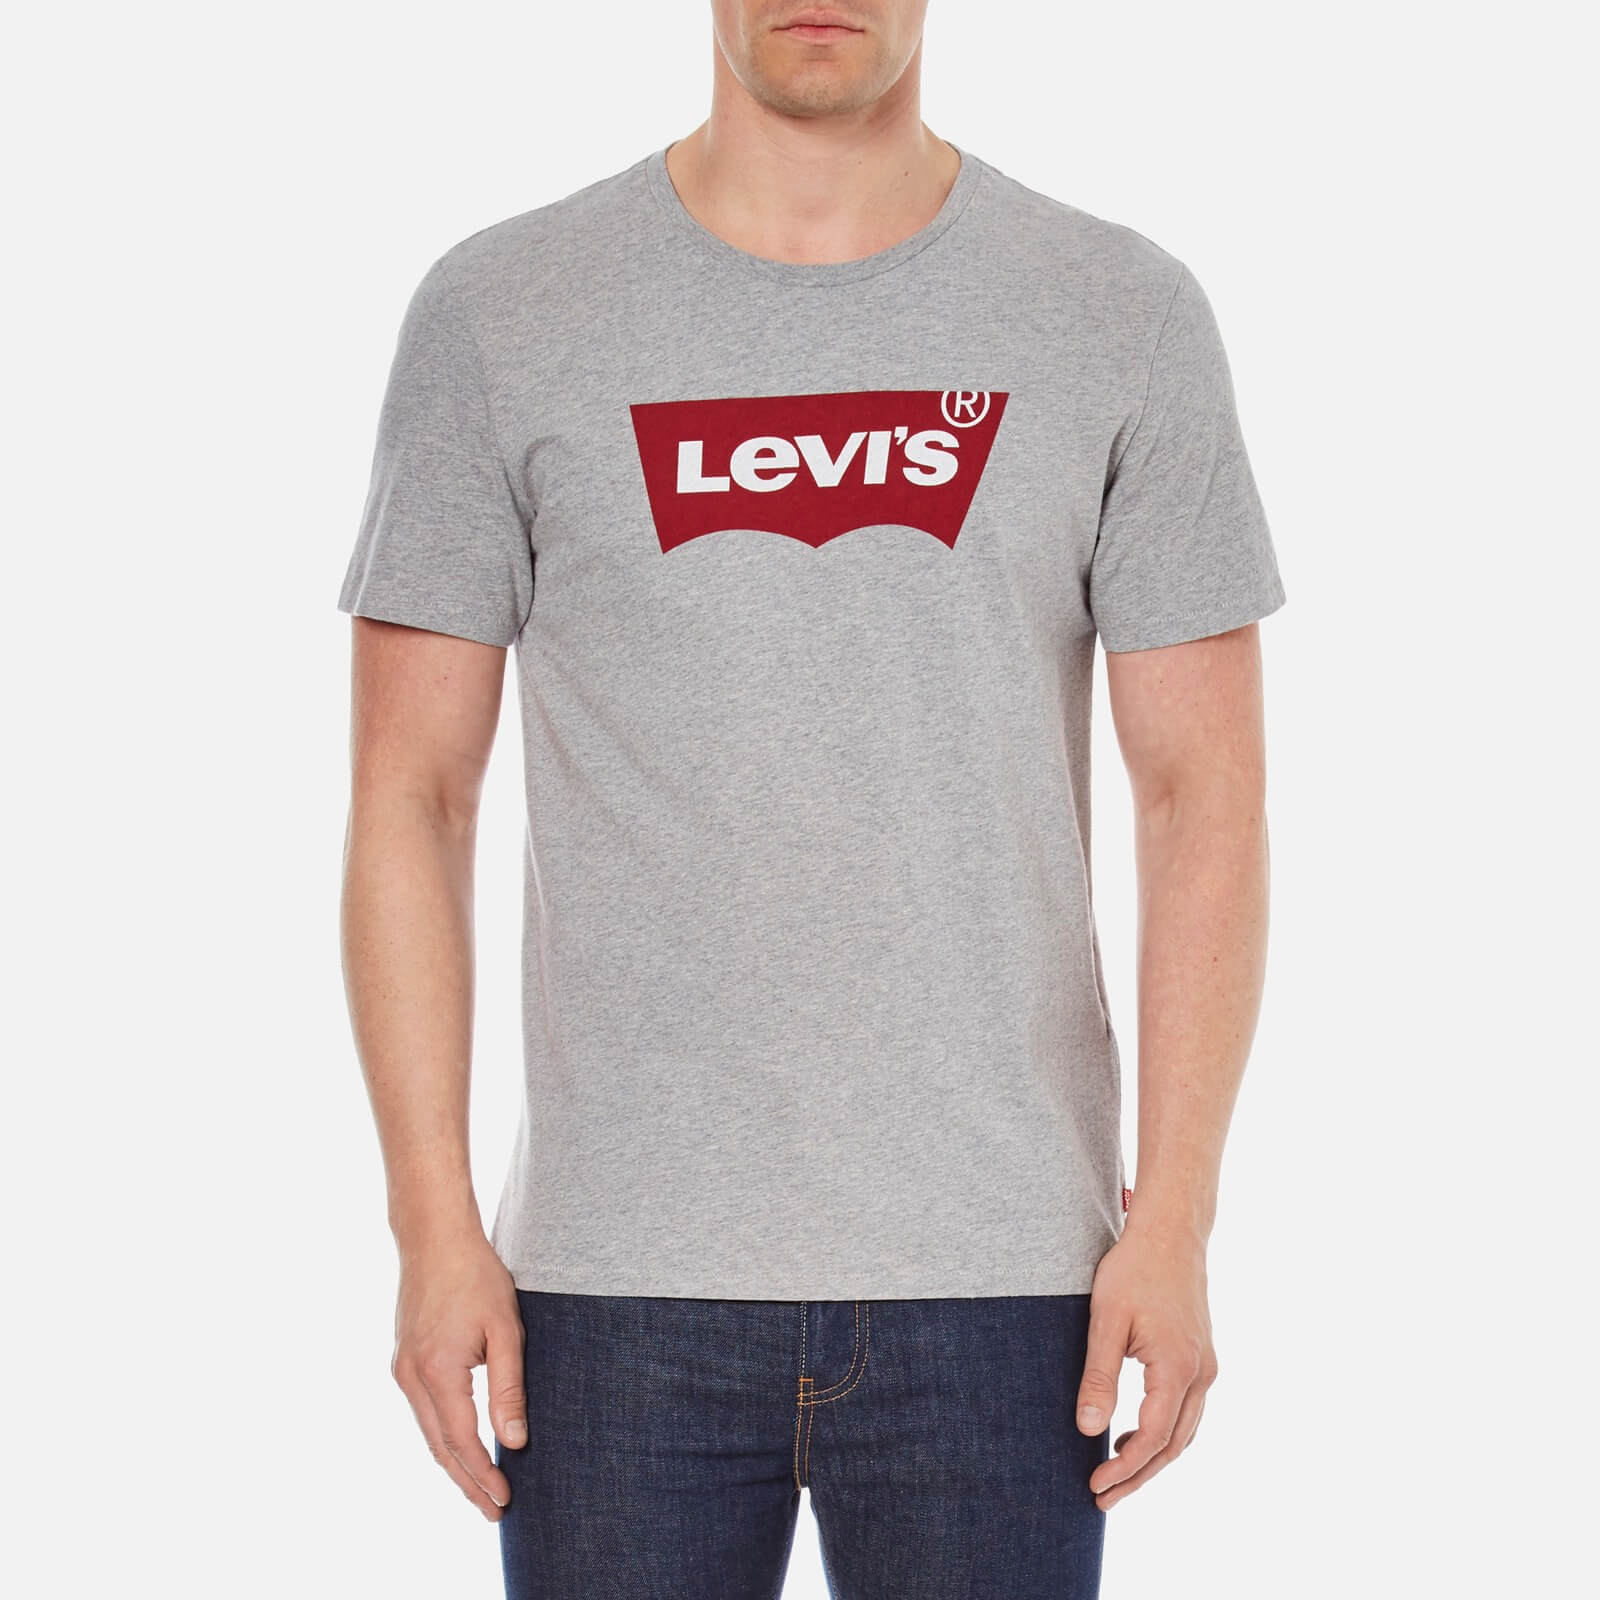 Лев ис. Футболка левайс мужская серая. Футболка Levis logo серая. Levis Housemark White t-Shirt. Майка Levis мужские.